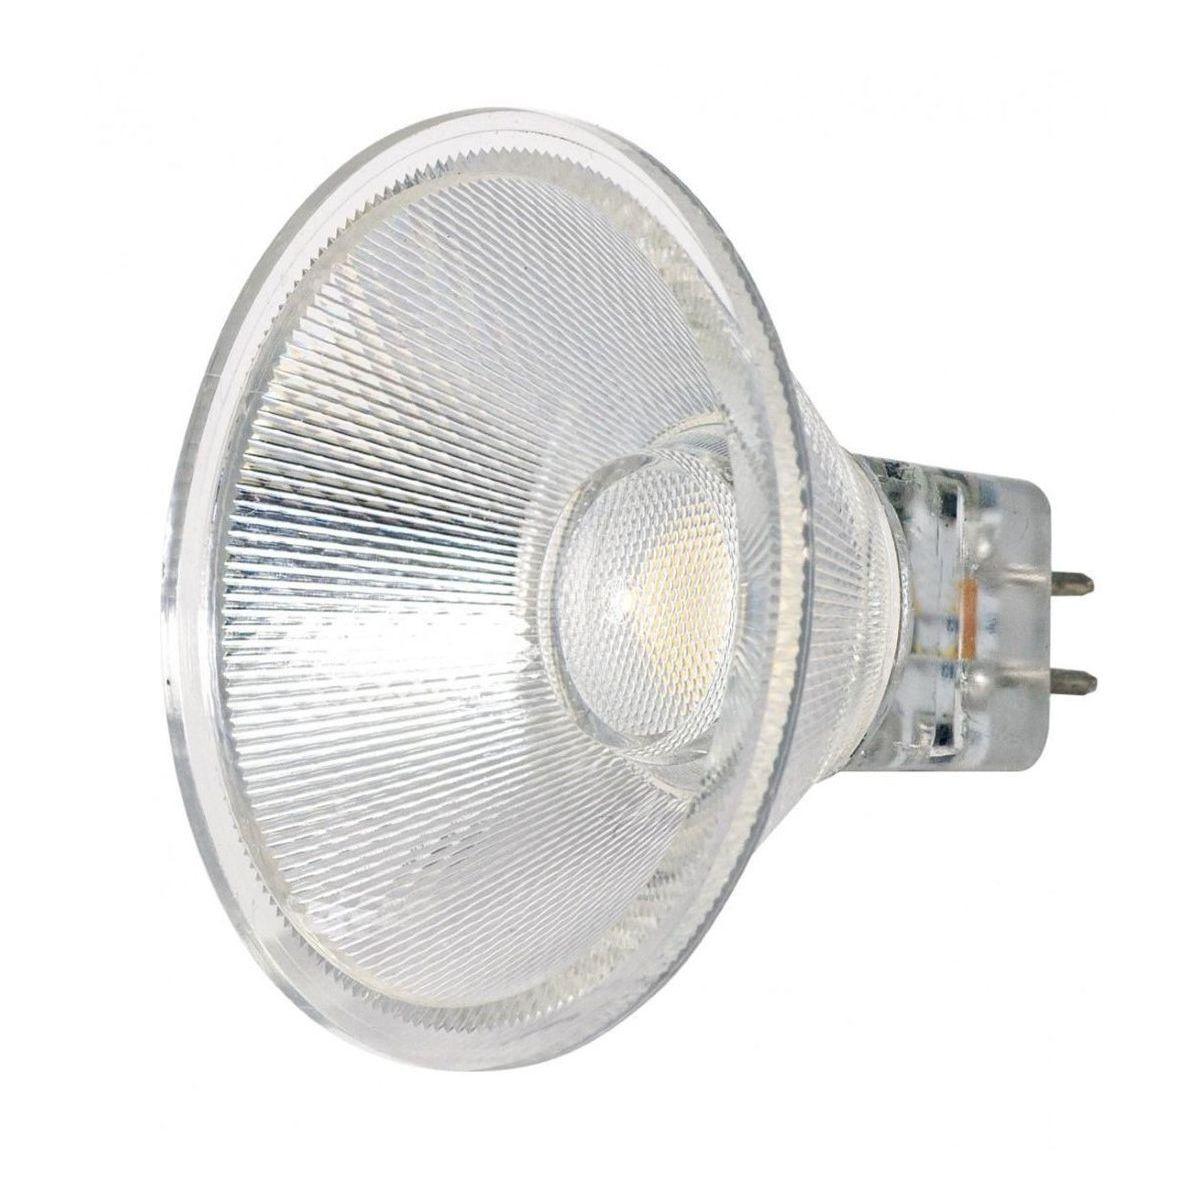 MR16 Reflector LED bulb, 3 watt, 330 Lumens, 3000K, GU5.3 Base, 40 Deg. Flood